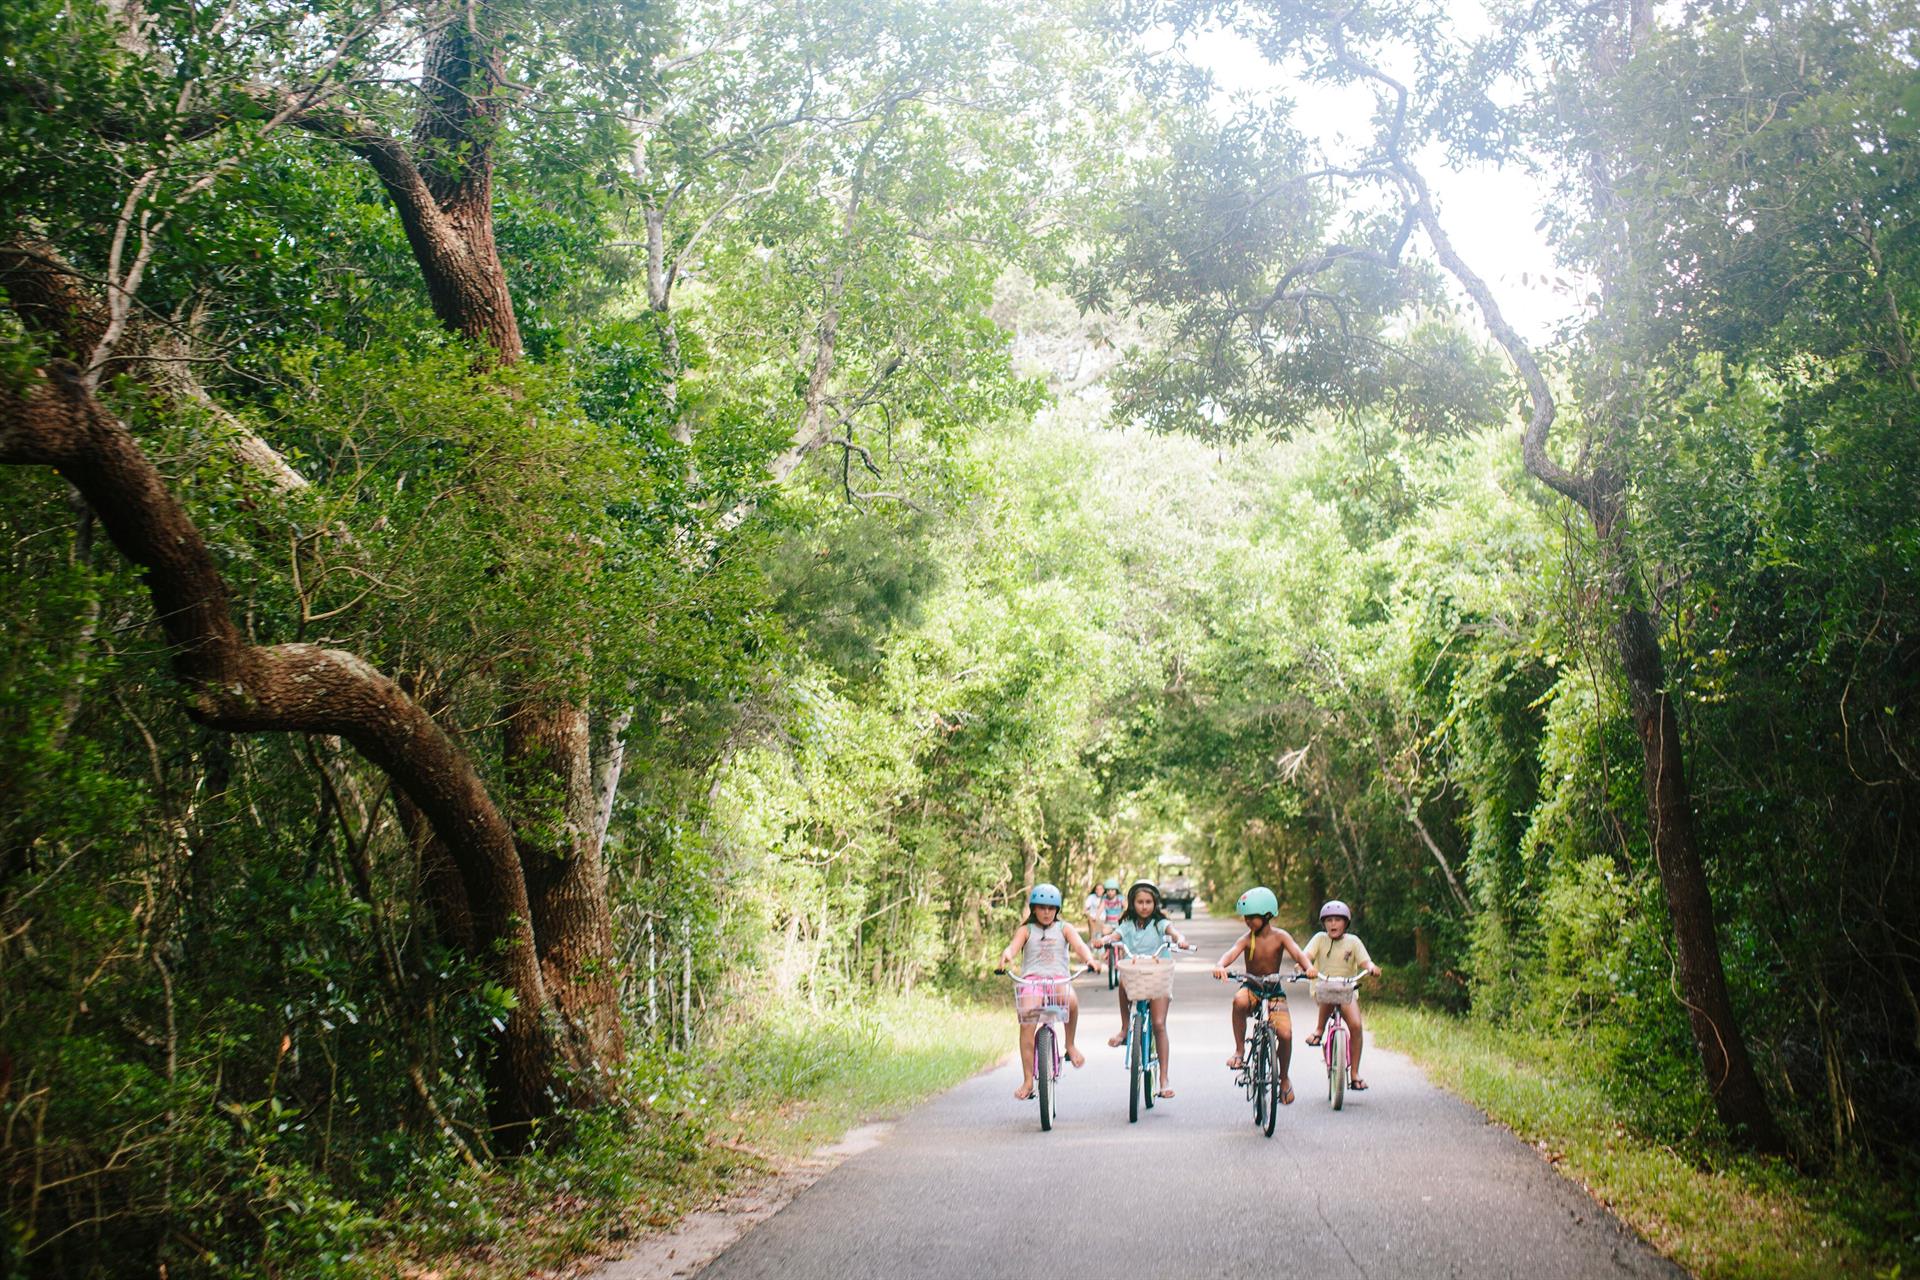 Bald Head Island forest views kids on bikes